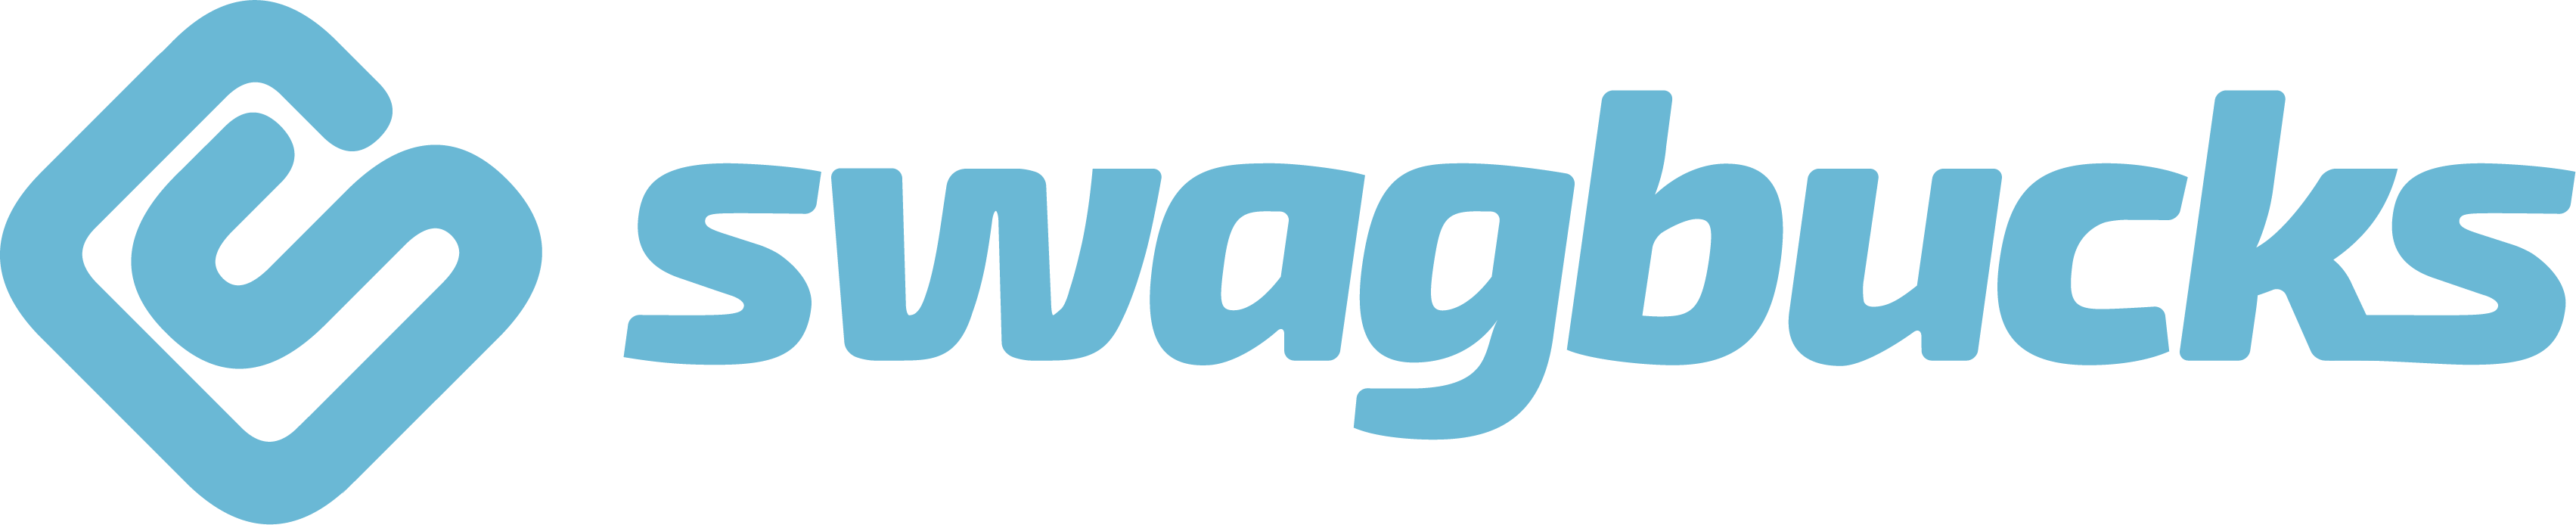 swagbucks-logo